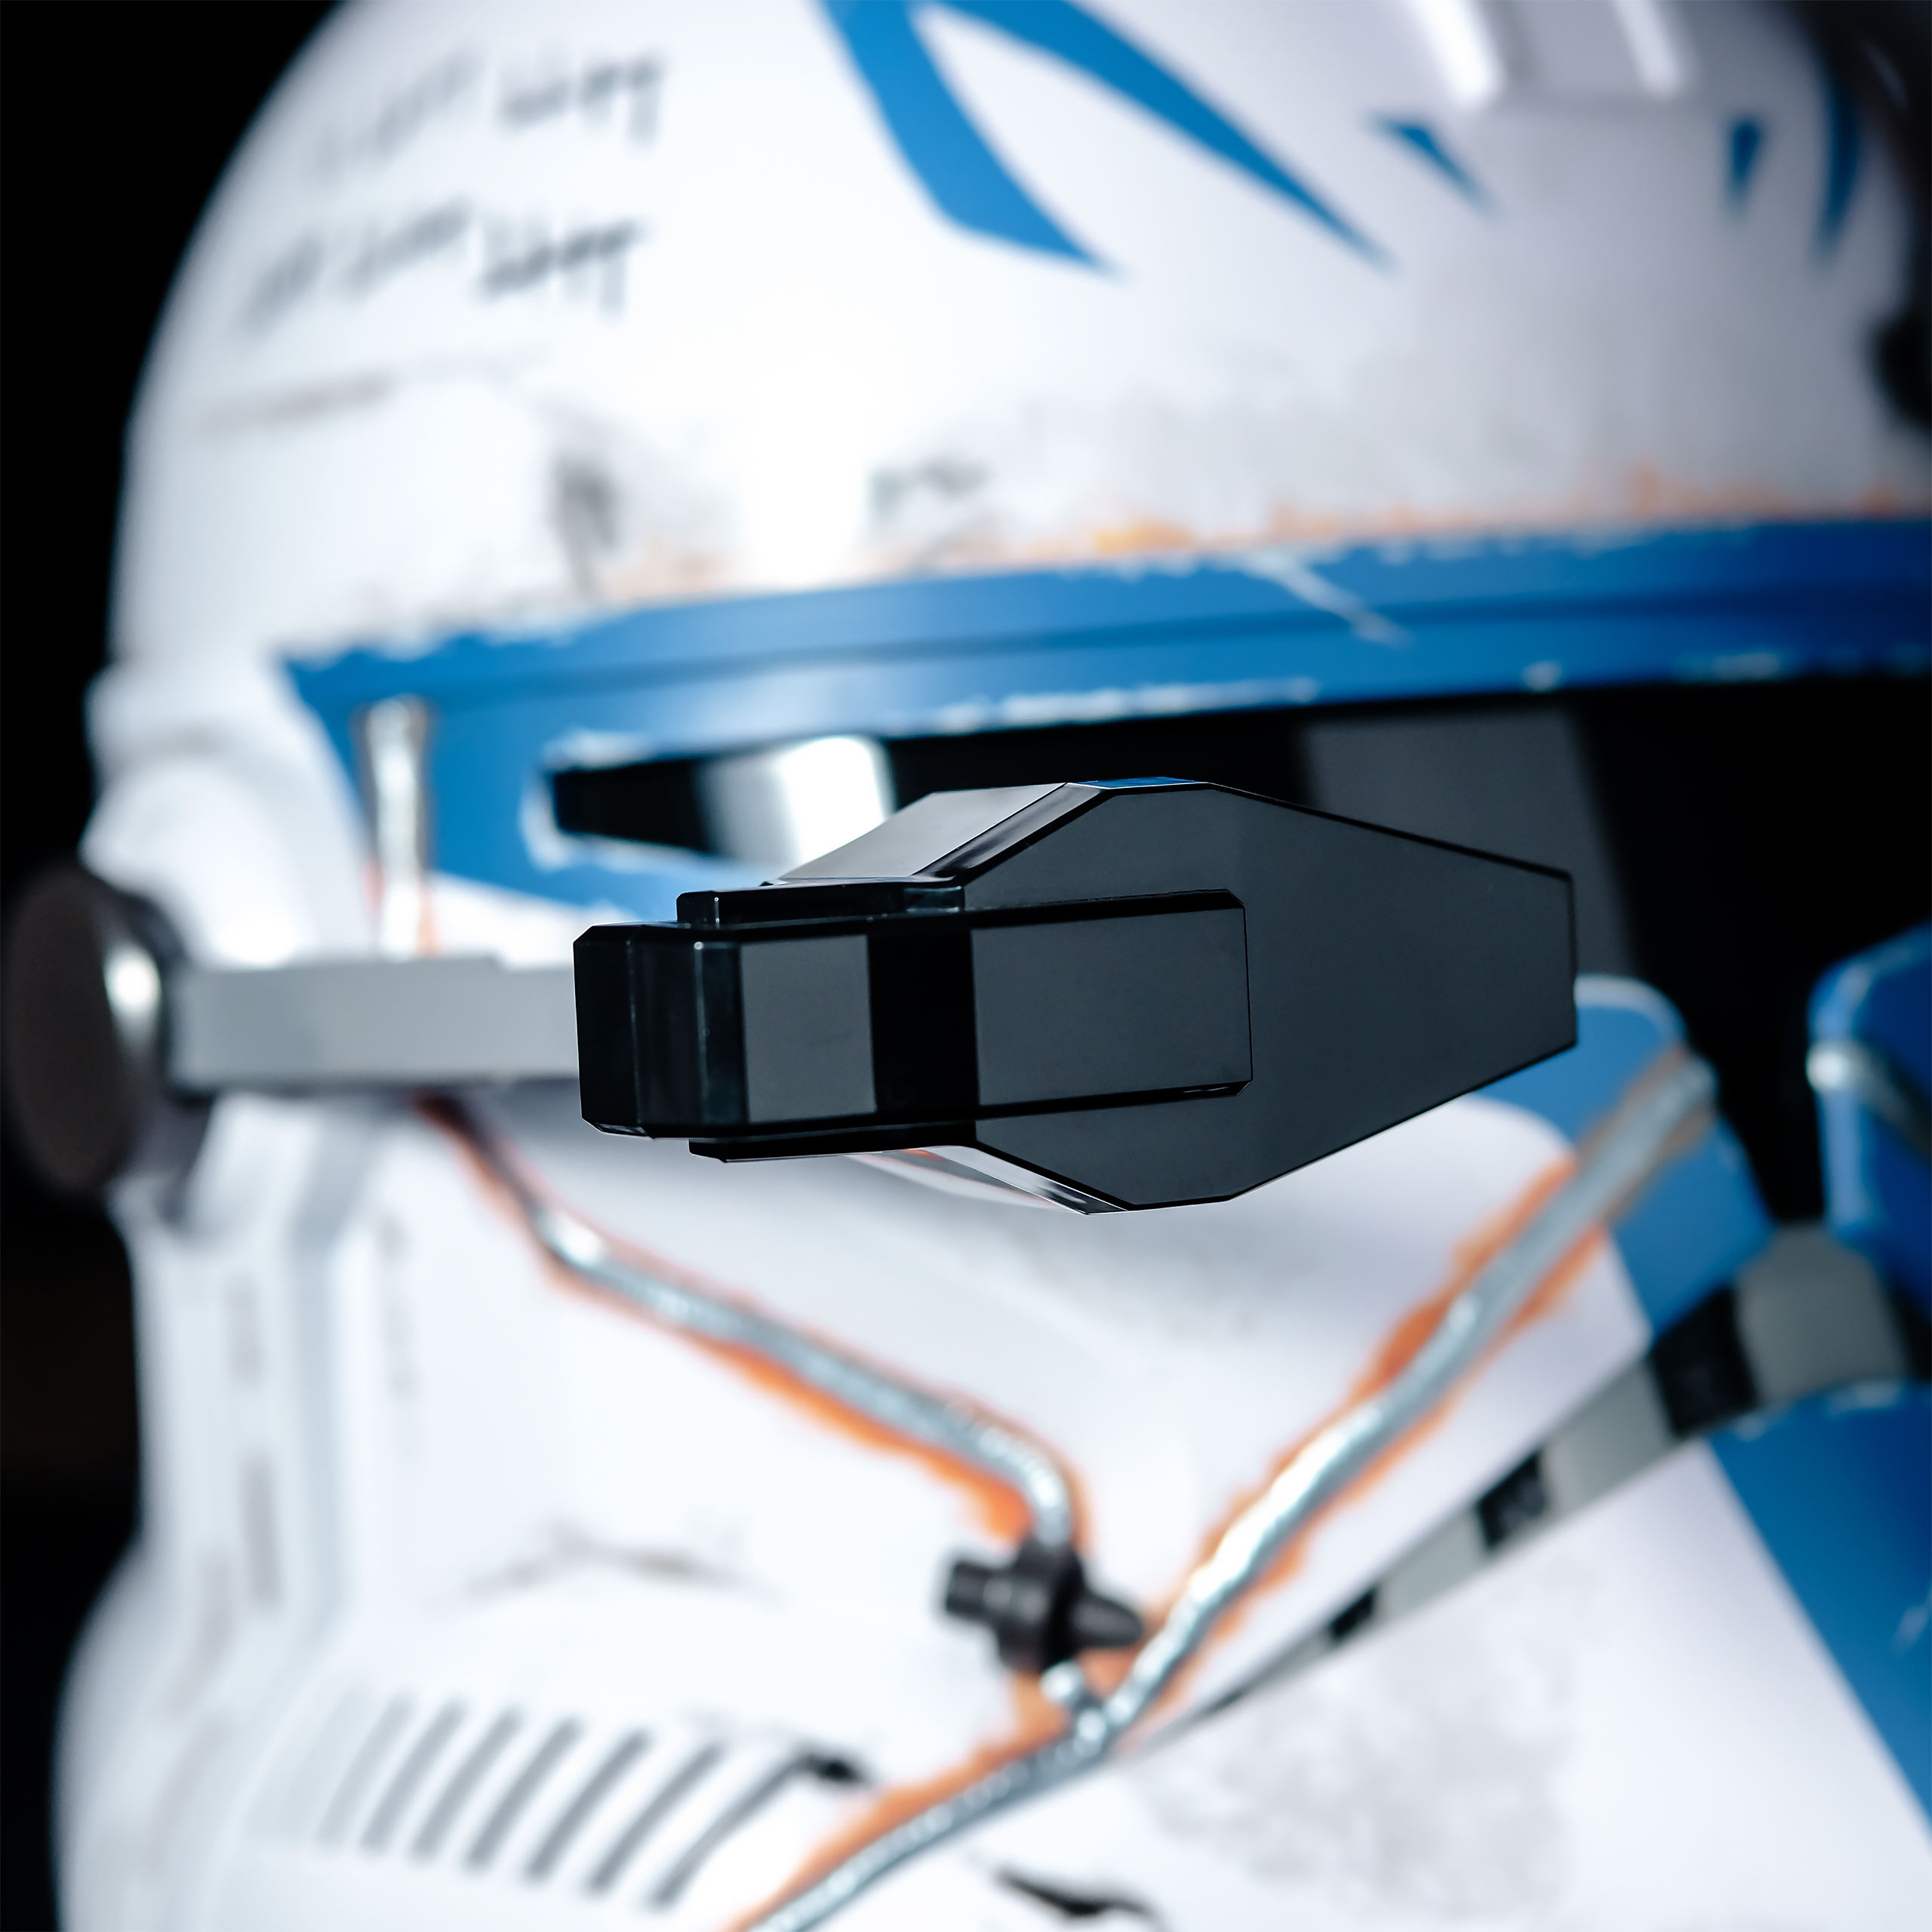 Star Wars Ahsoka - Captain Rex Black Series Helmet Replica